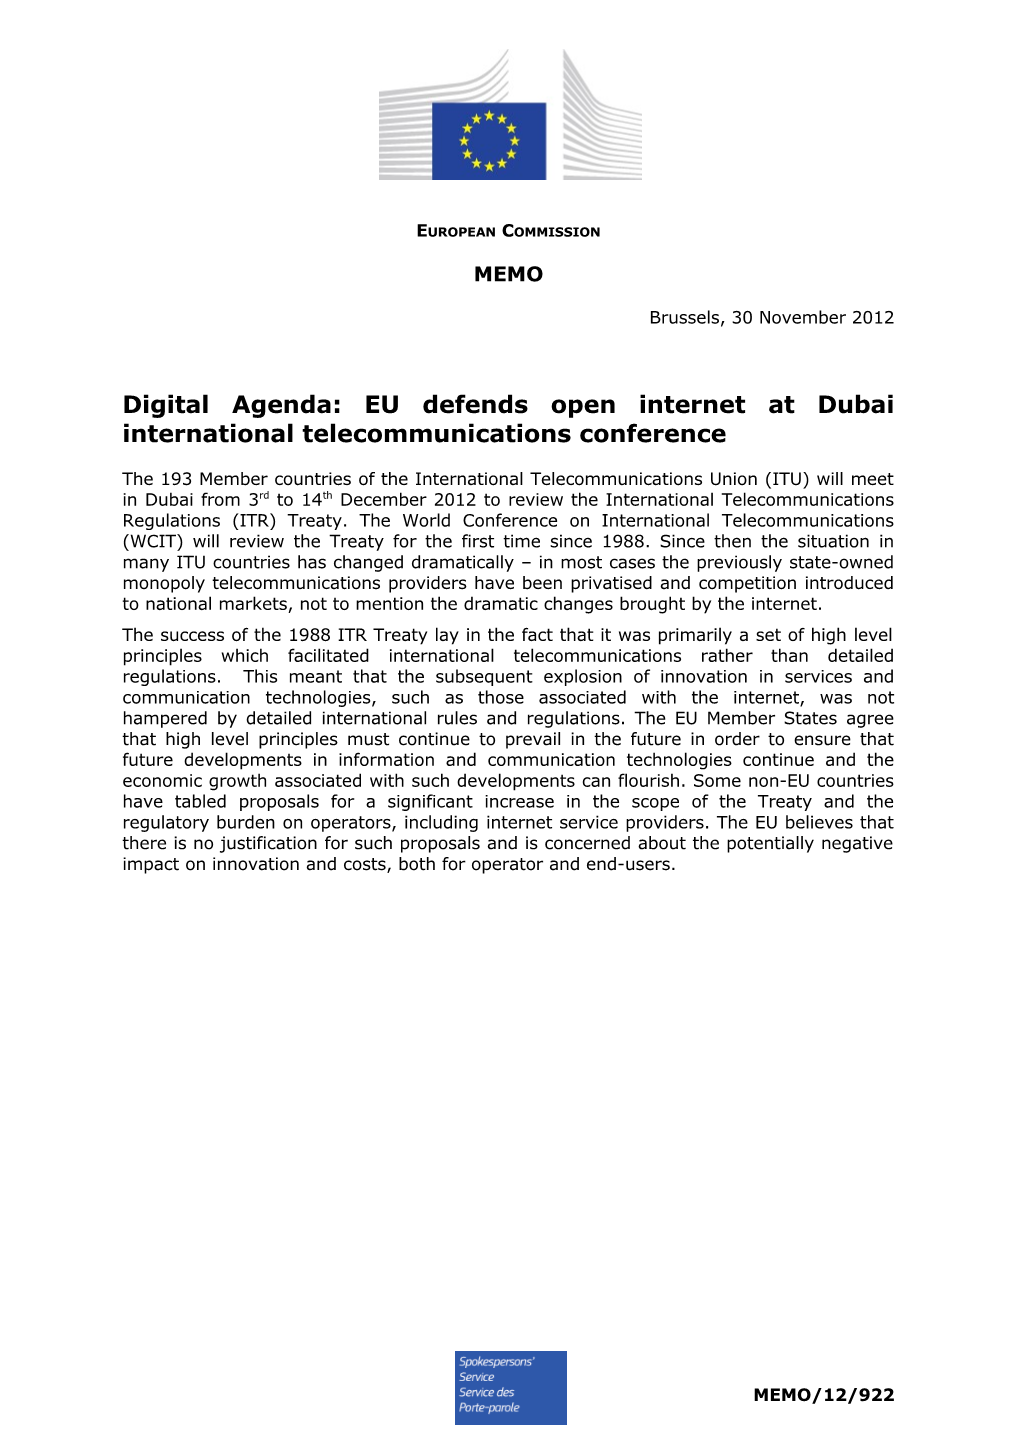 Digital Agenda: EU Defends Open Internet at Dubai International Telecommunications Conference